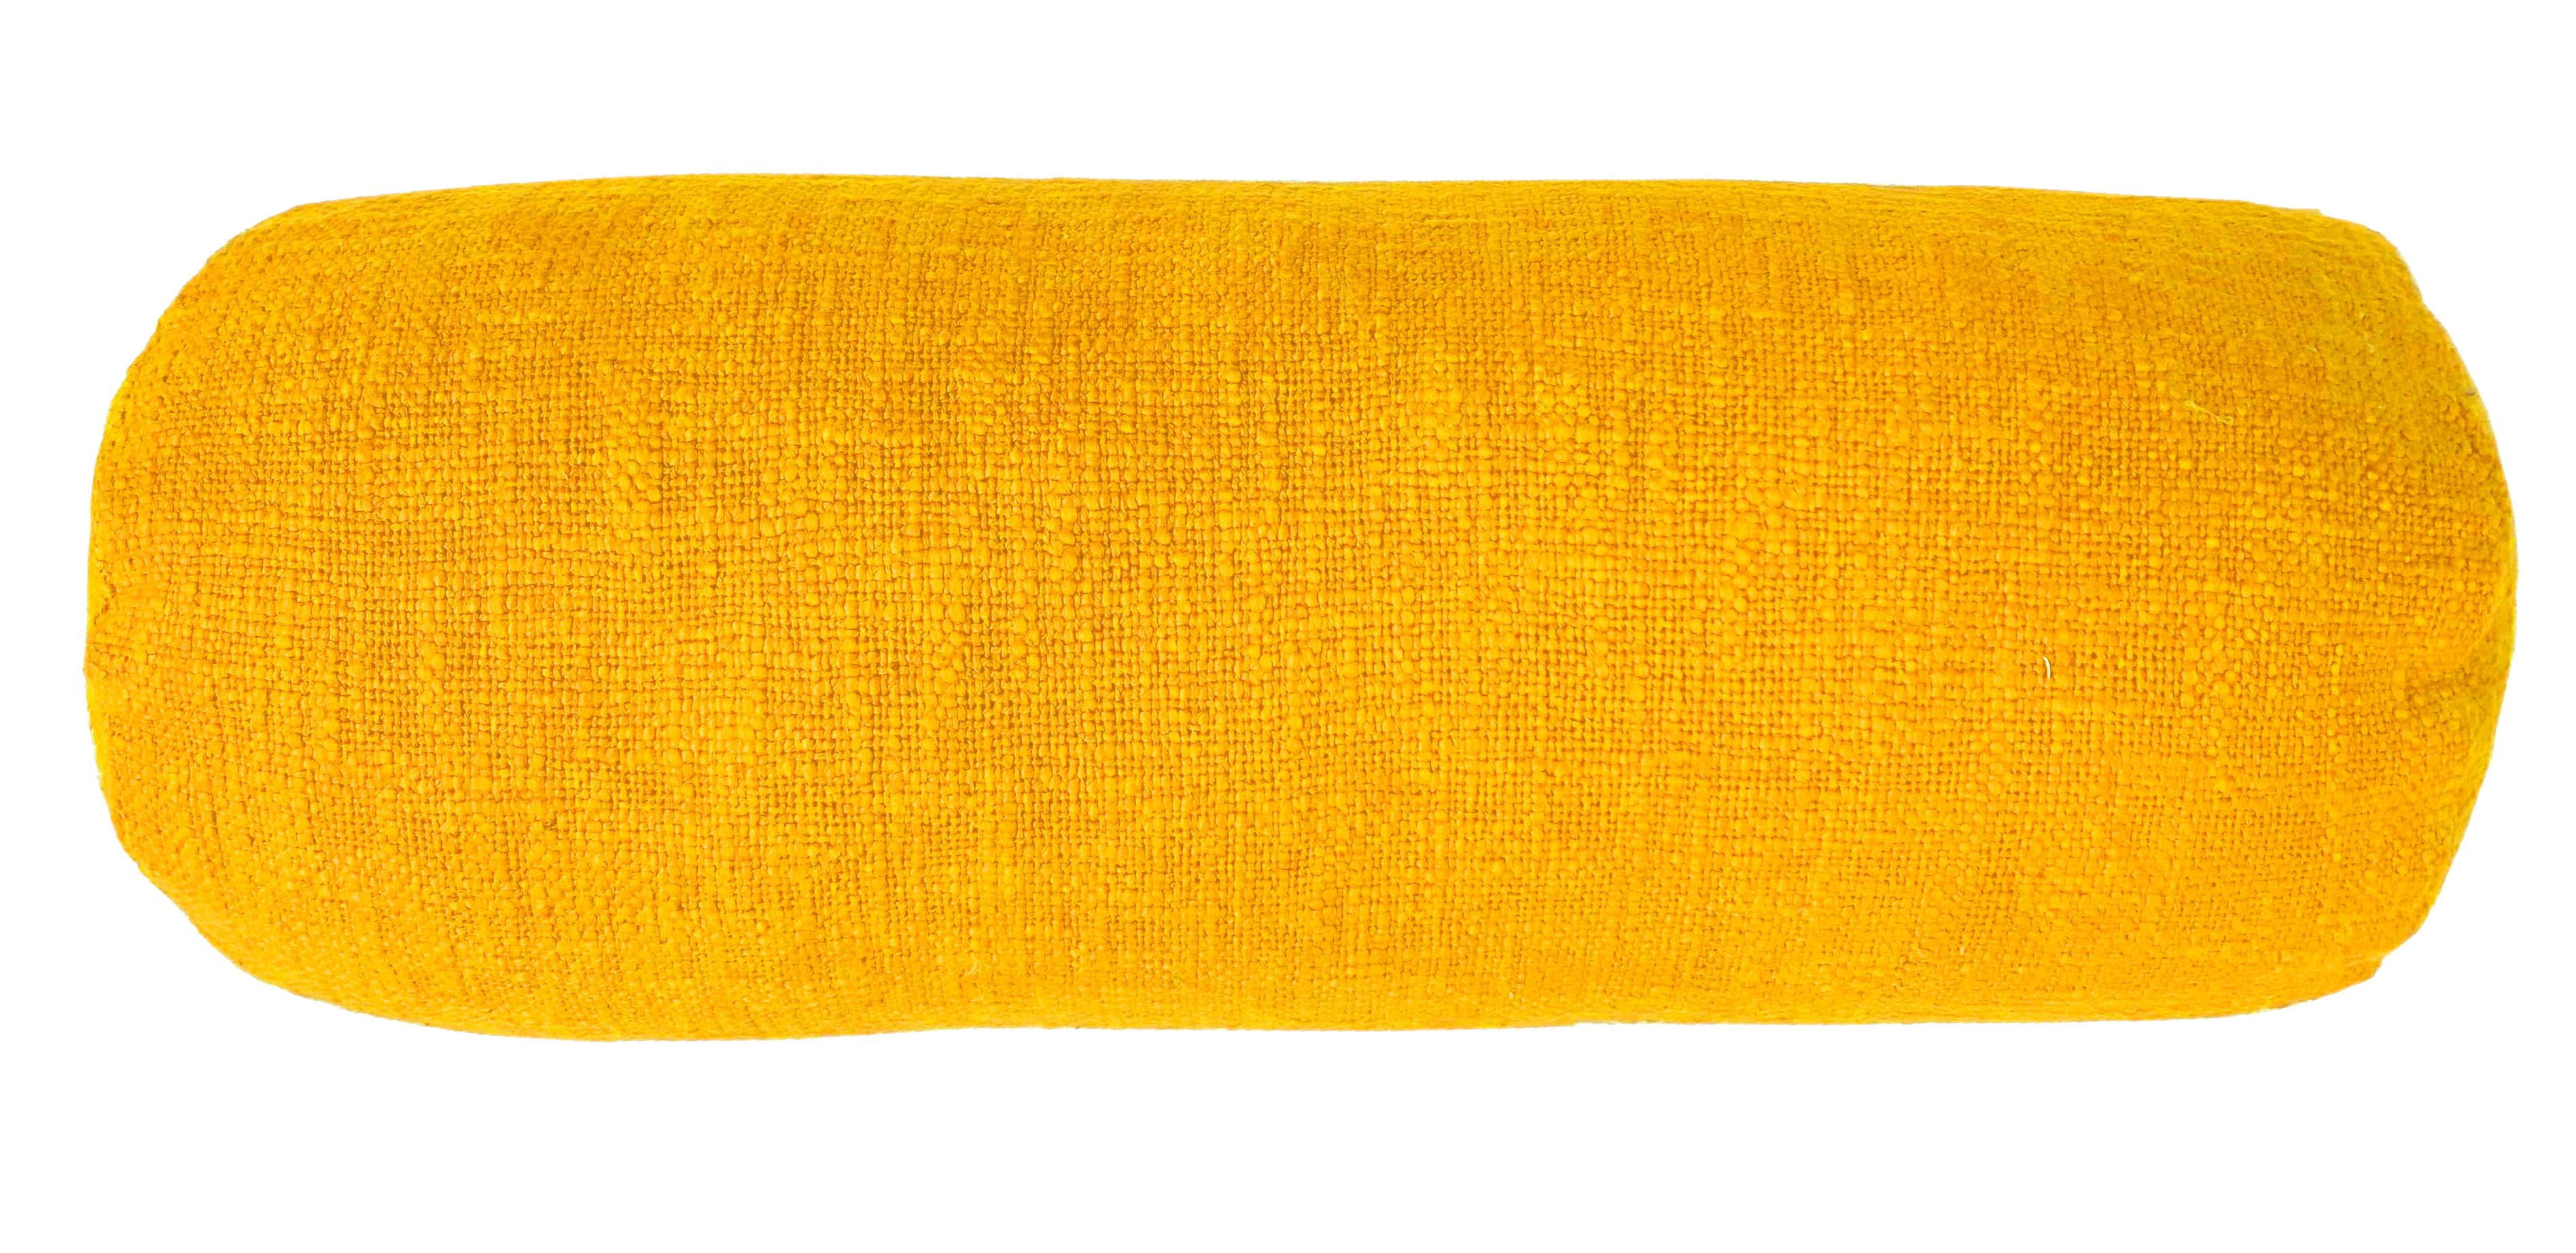 Bolster COTTON SLUB 15 x 45 cm, sunflower yellow